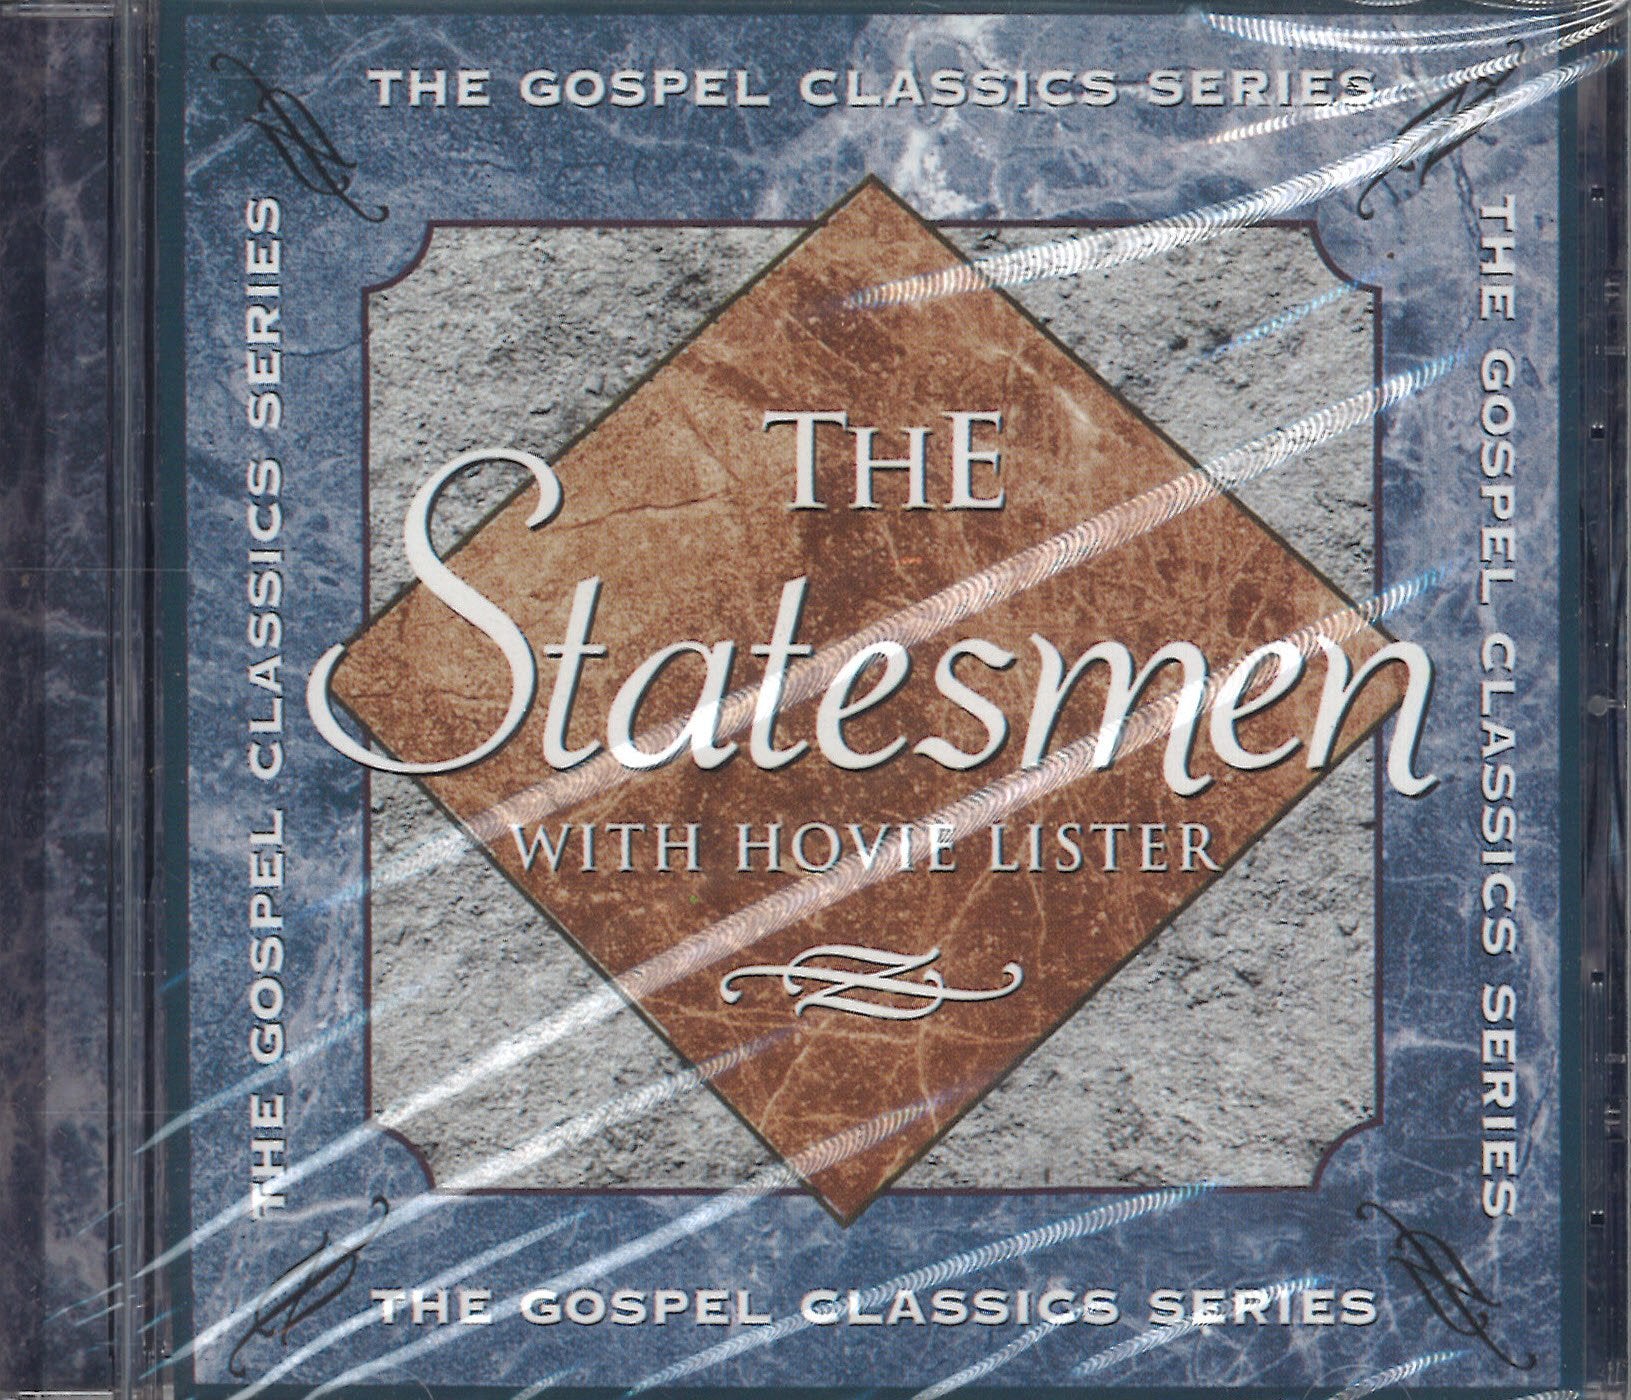 The Statesmen & Hovie Lister The Gospel Classics Series